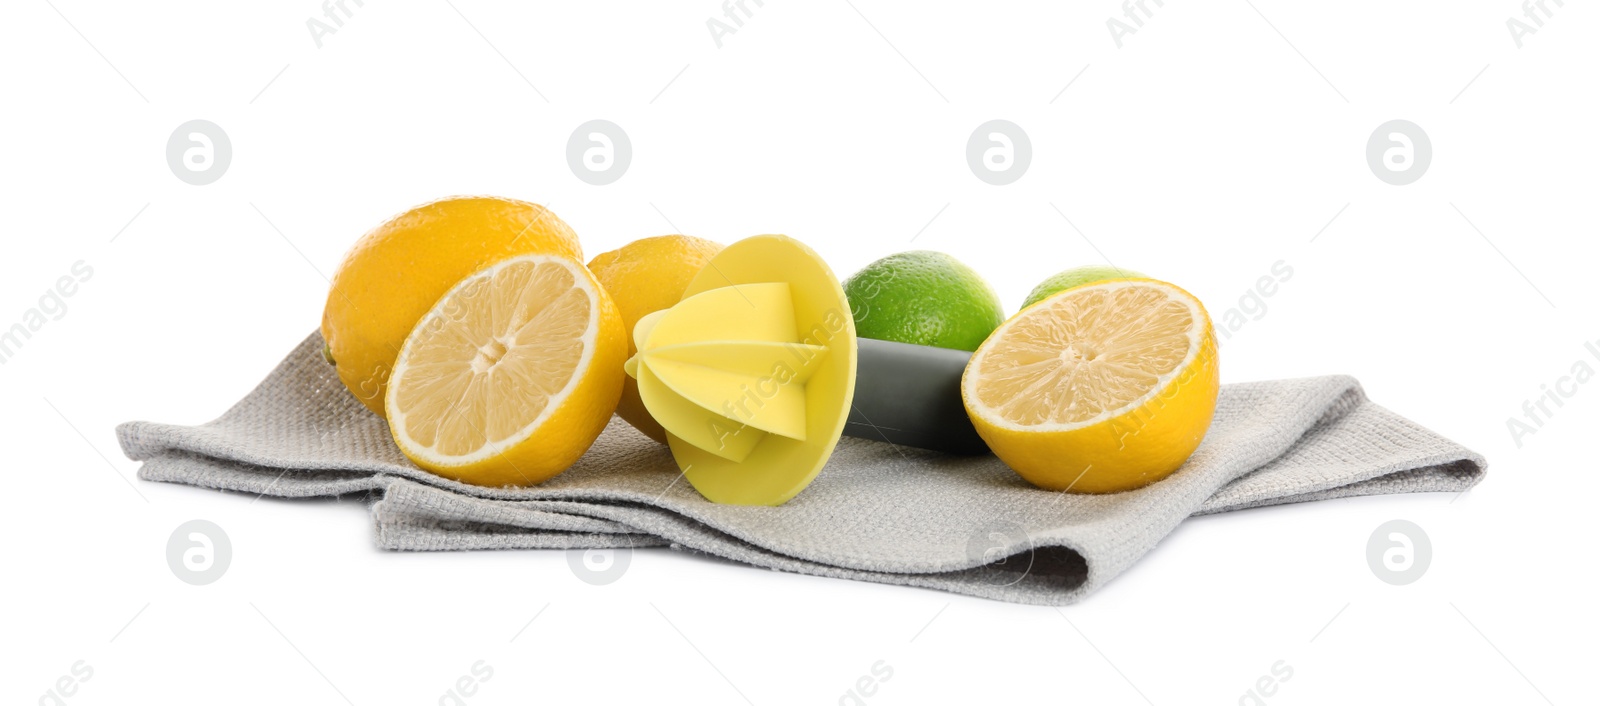 Photo of Plastic juicer, fresh lime and lemons on white background